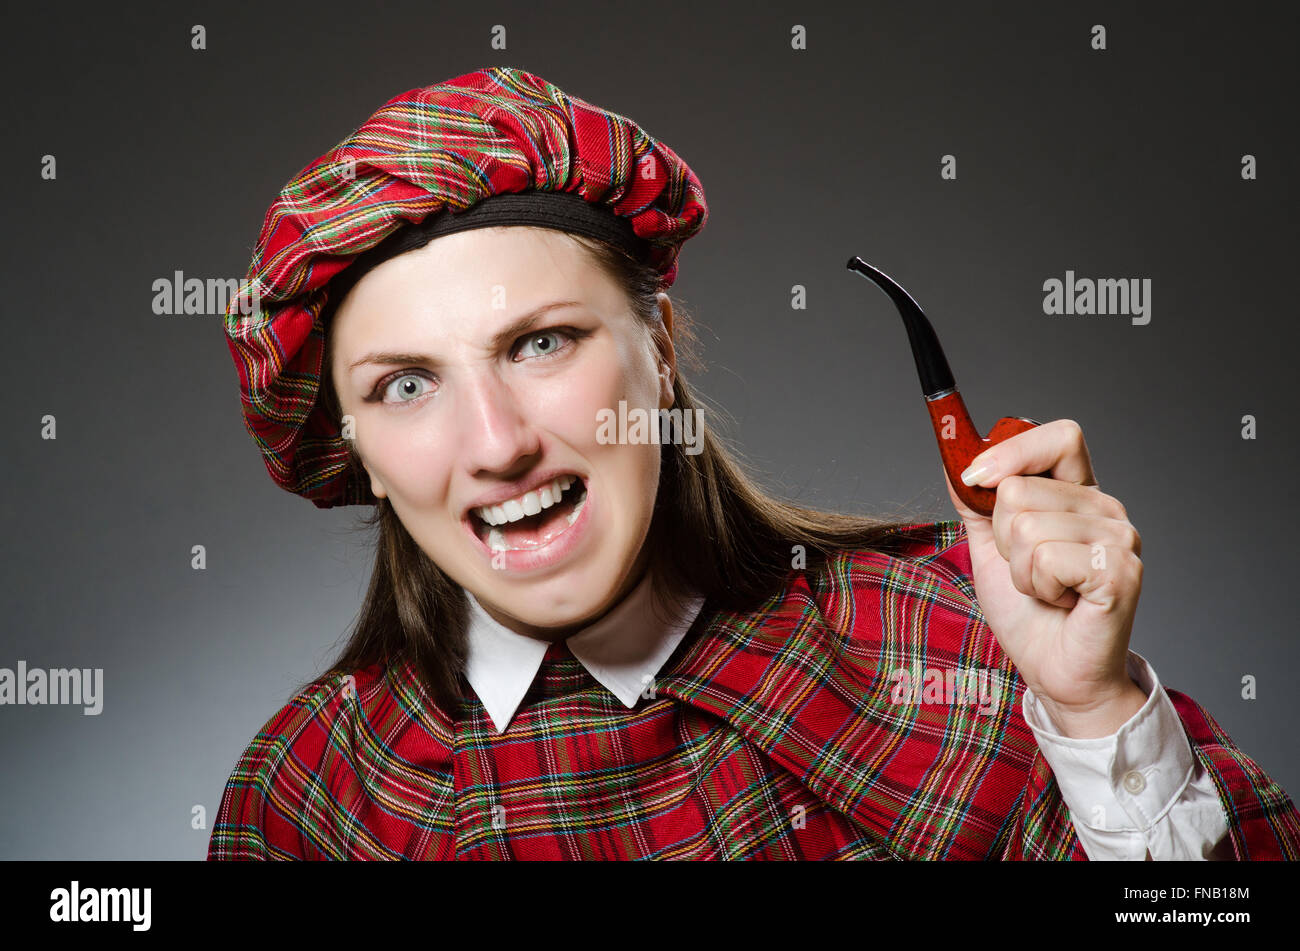 Woman wearing traditional scottish clothing Stock Photo